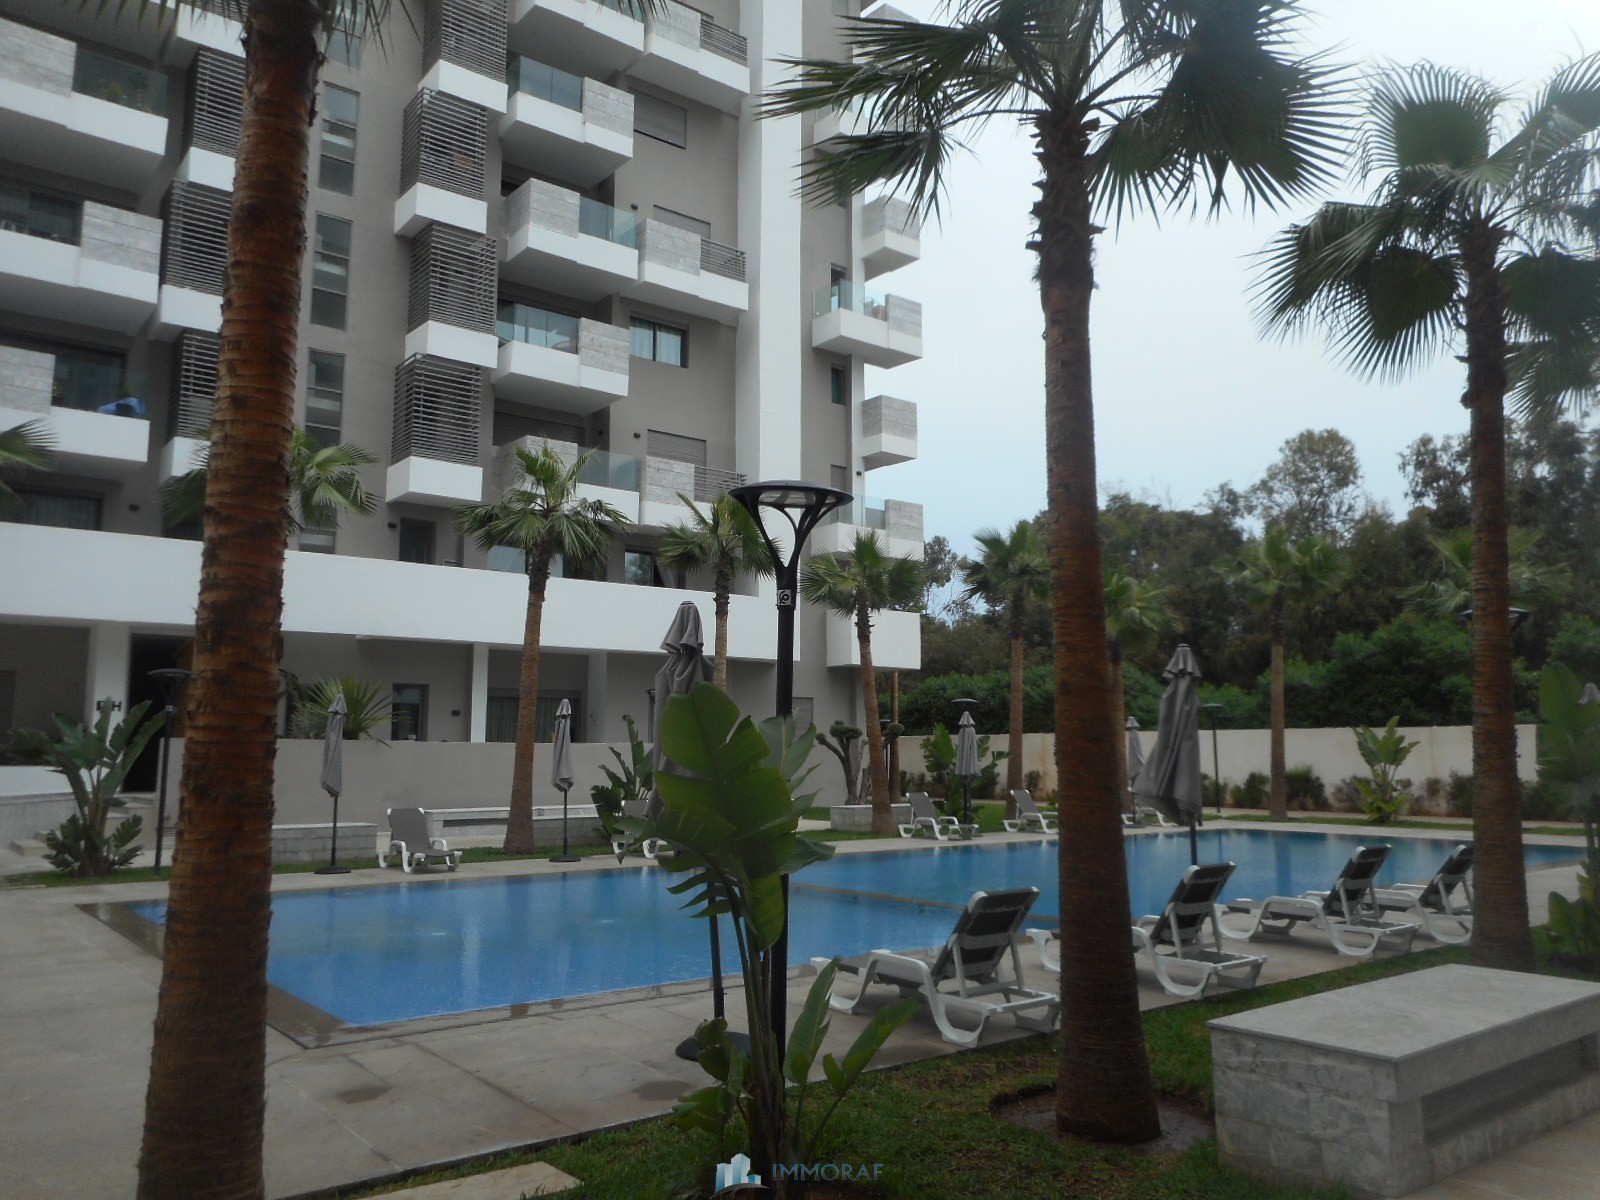 Location Appartement vide Finance City Casablanca